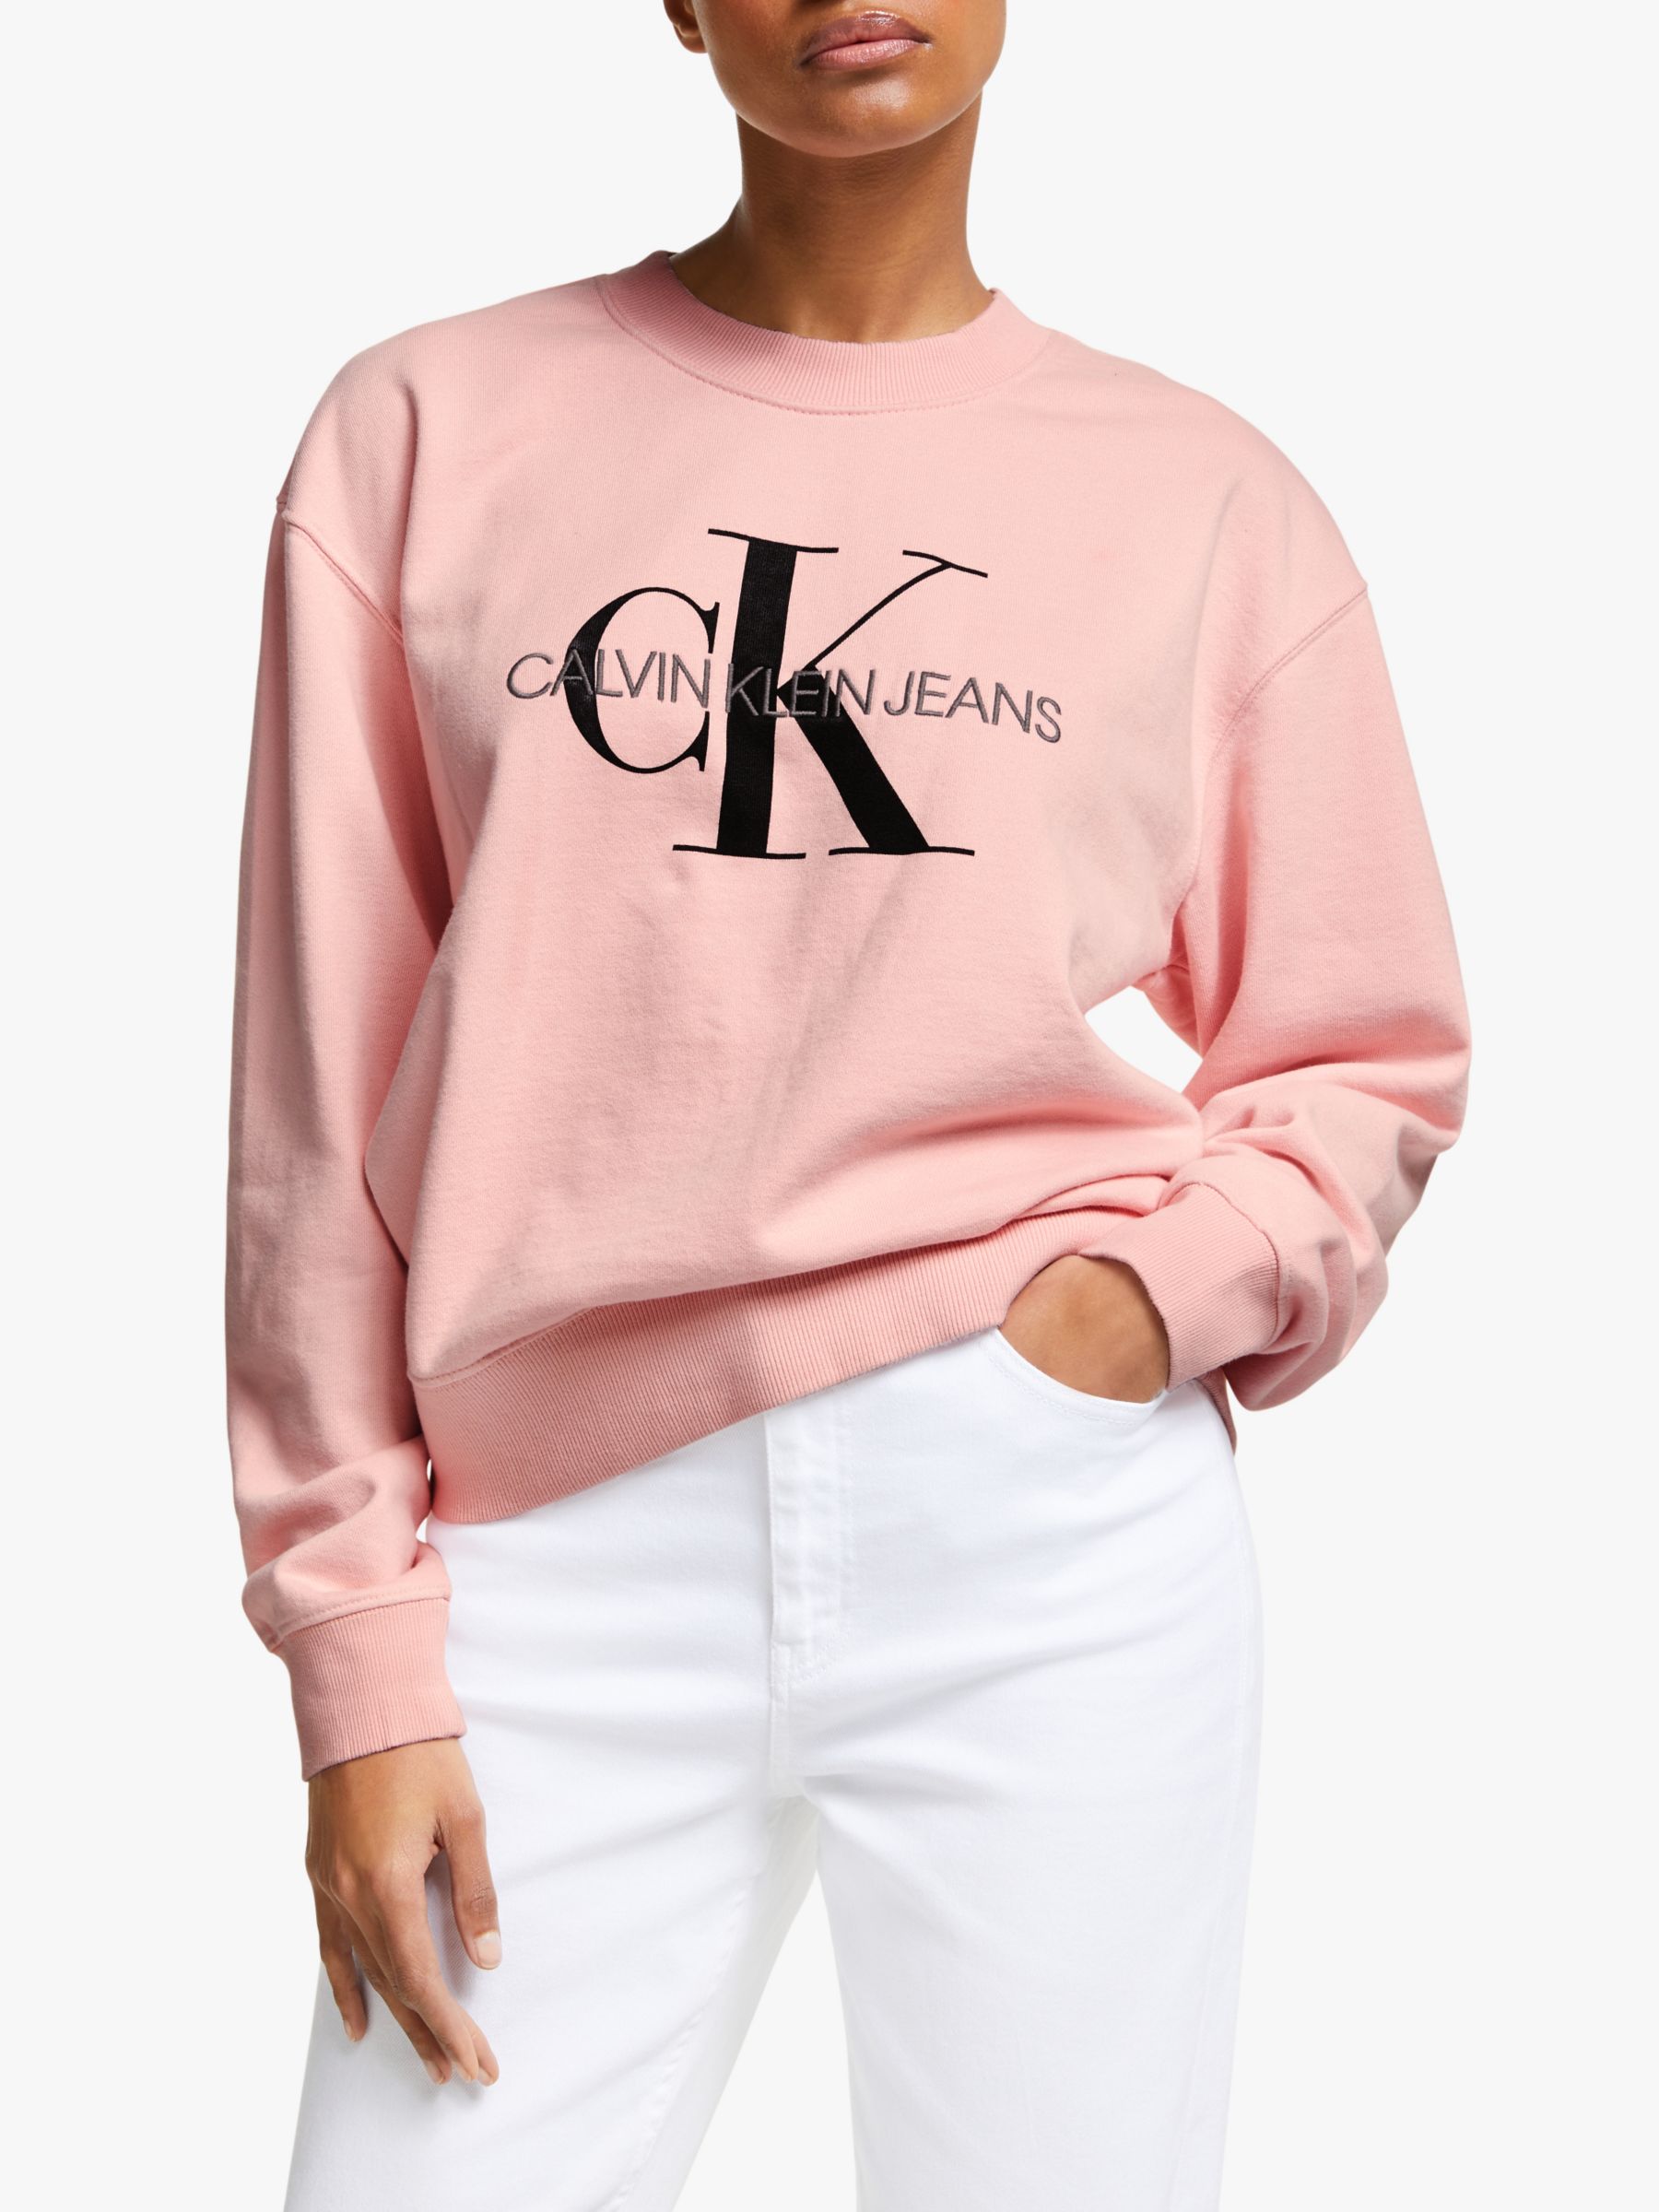 calvin klein women's pink sweatshirt